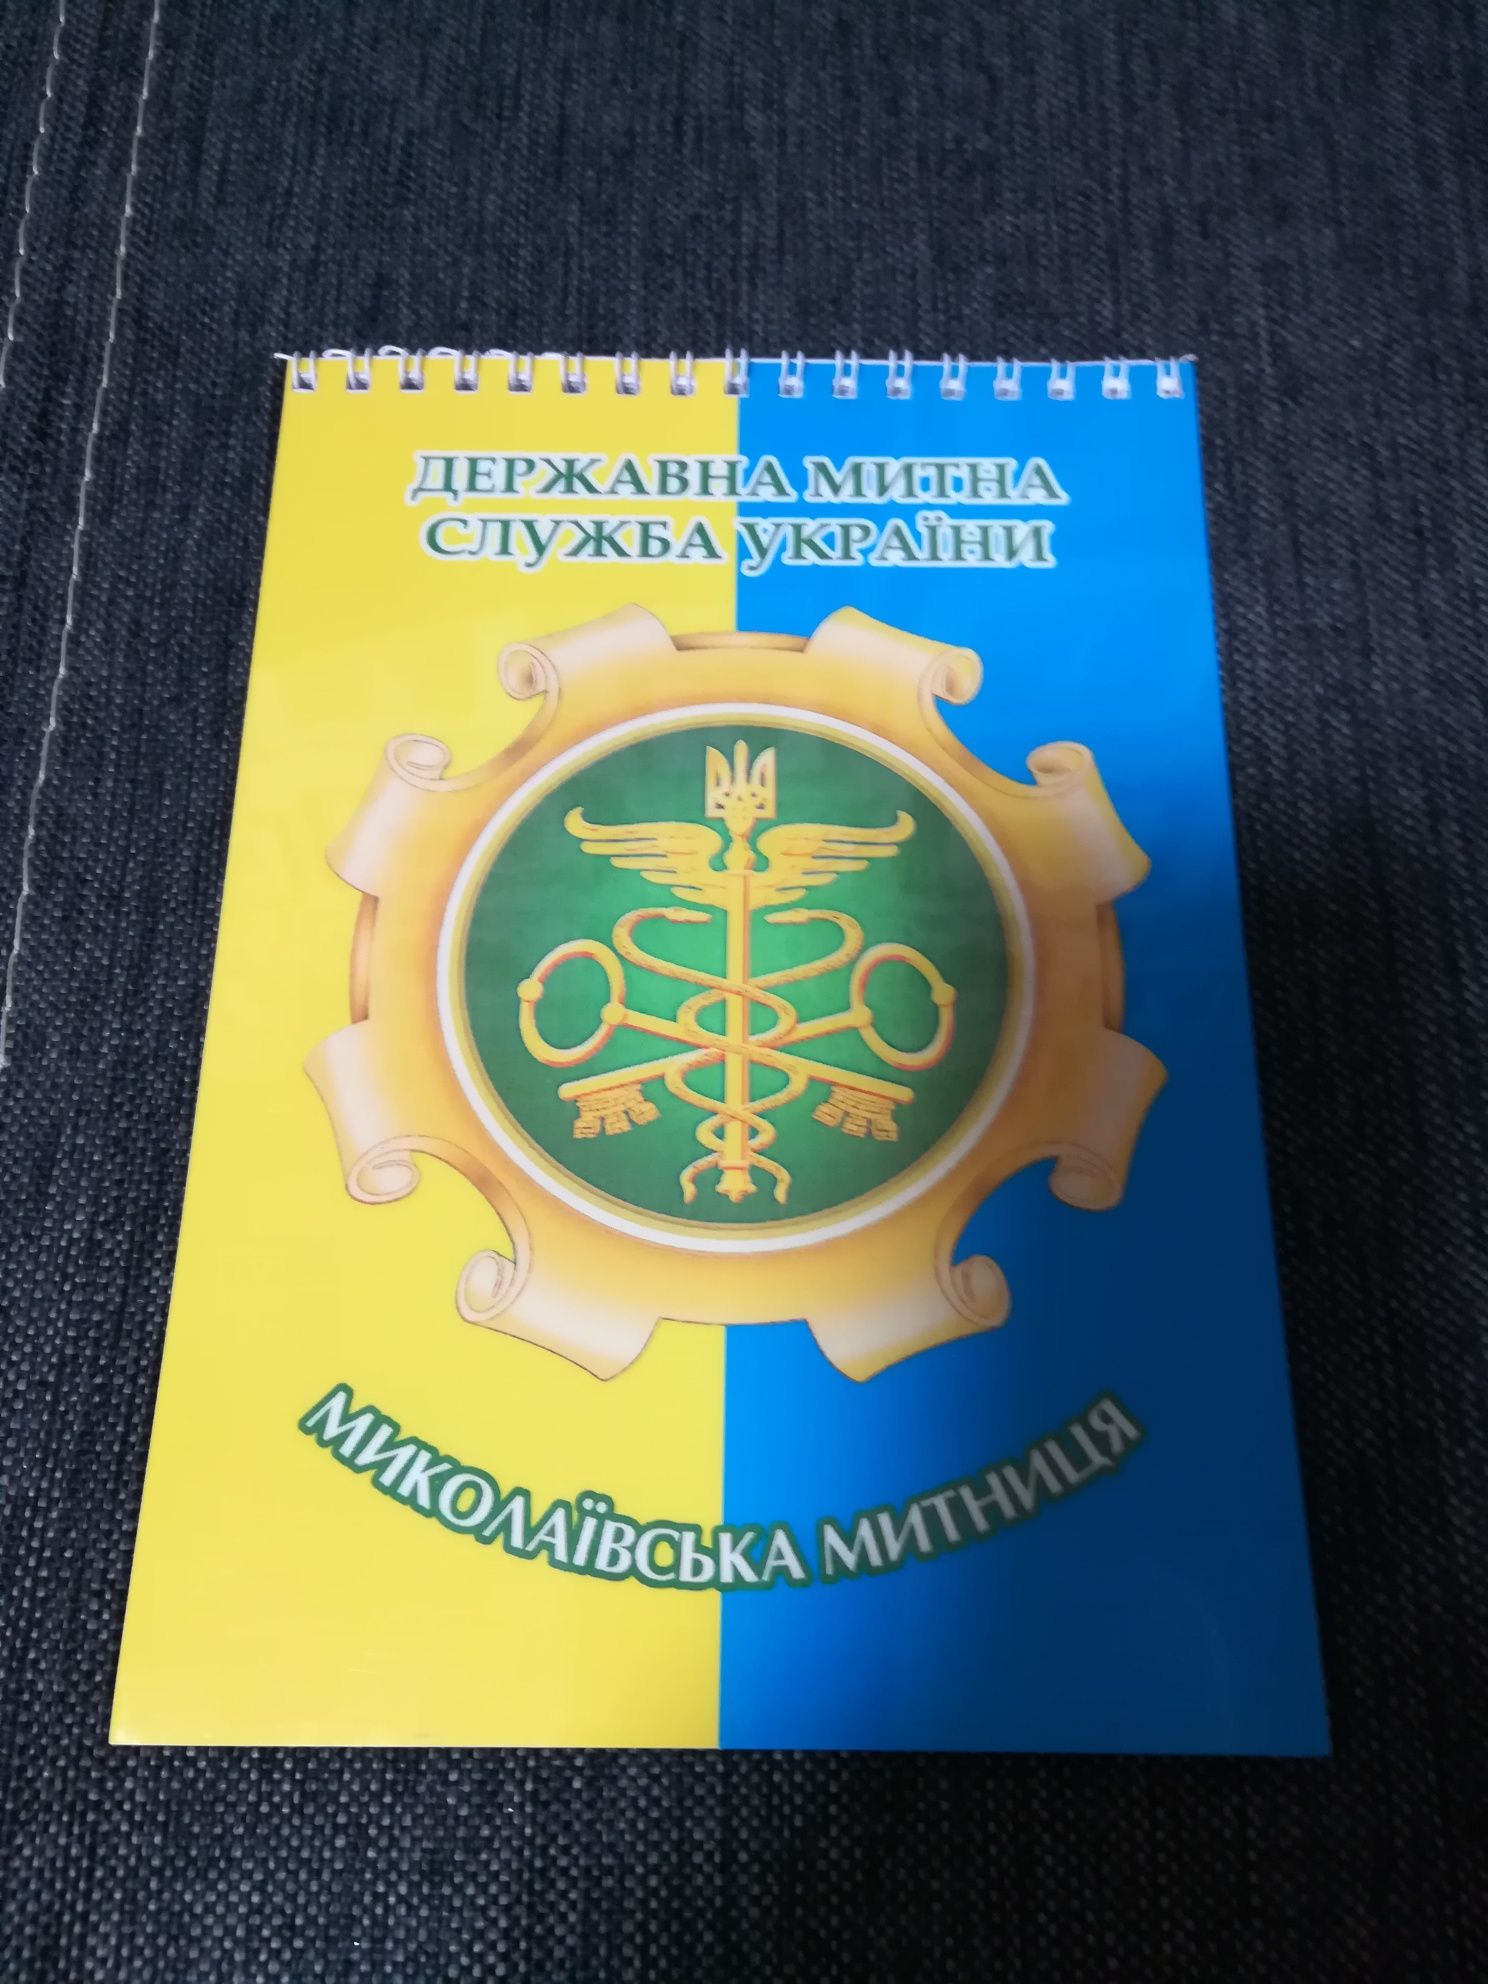 Блокнот с логотипом "Миколаївська митниця"